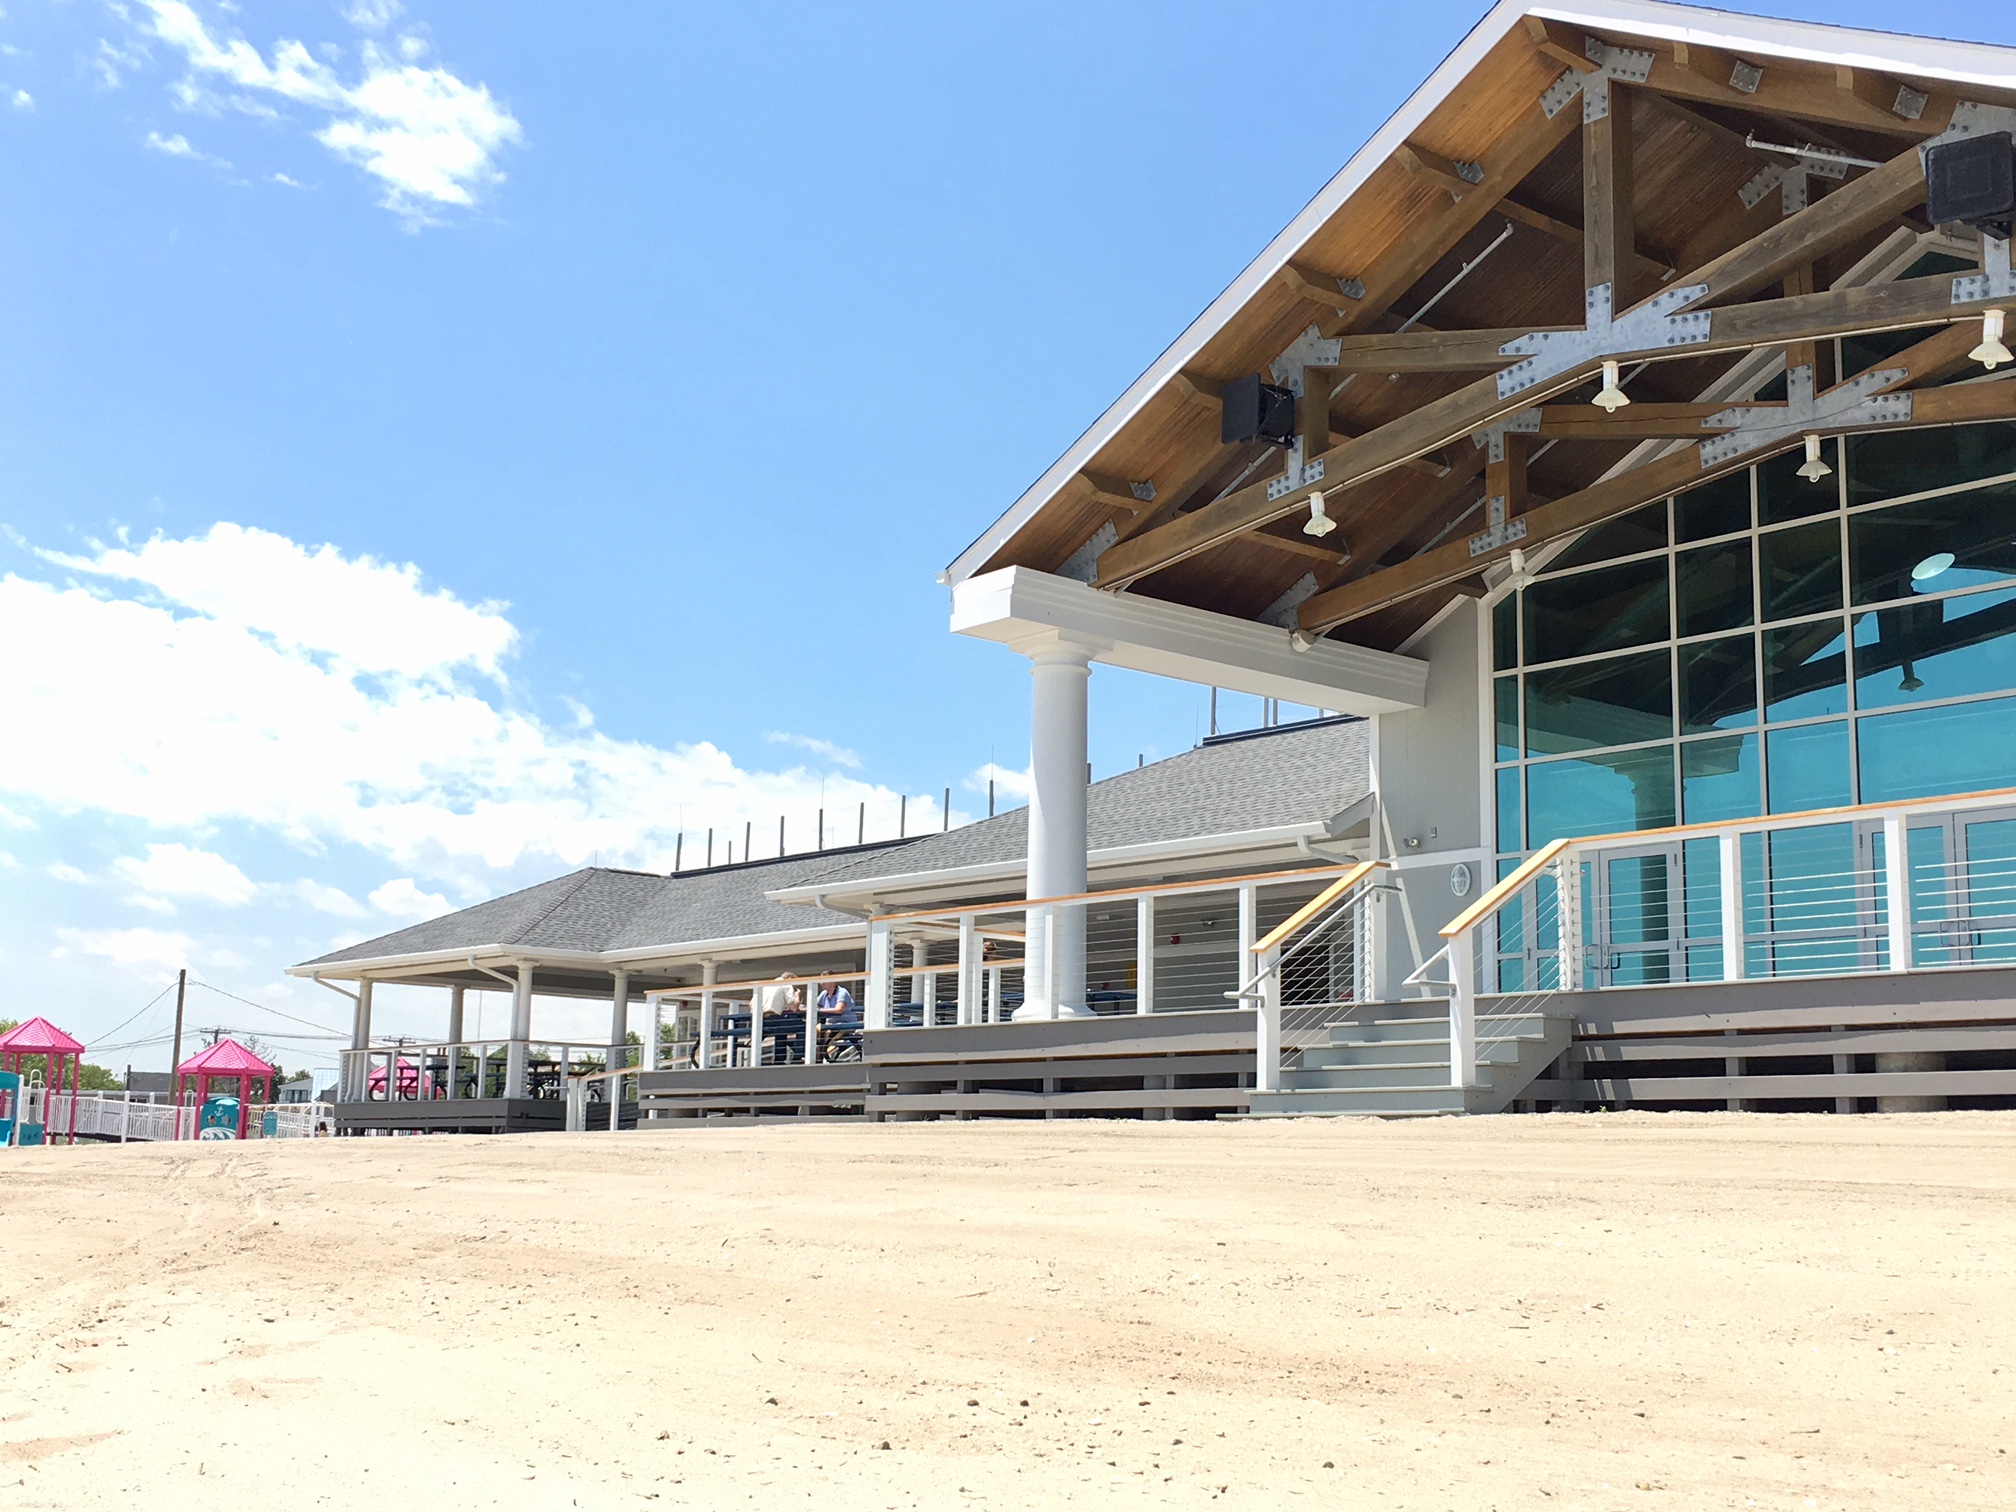 Penfield Pavilion re-opens after Sandy damage